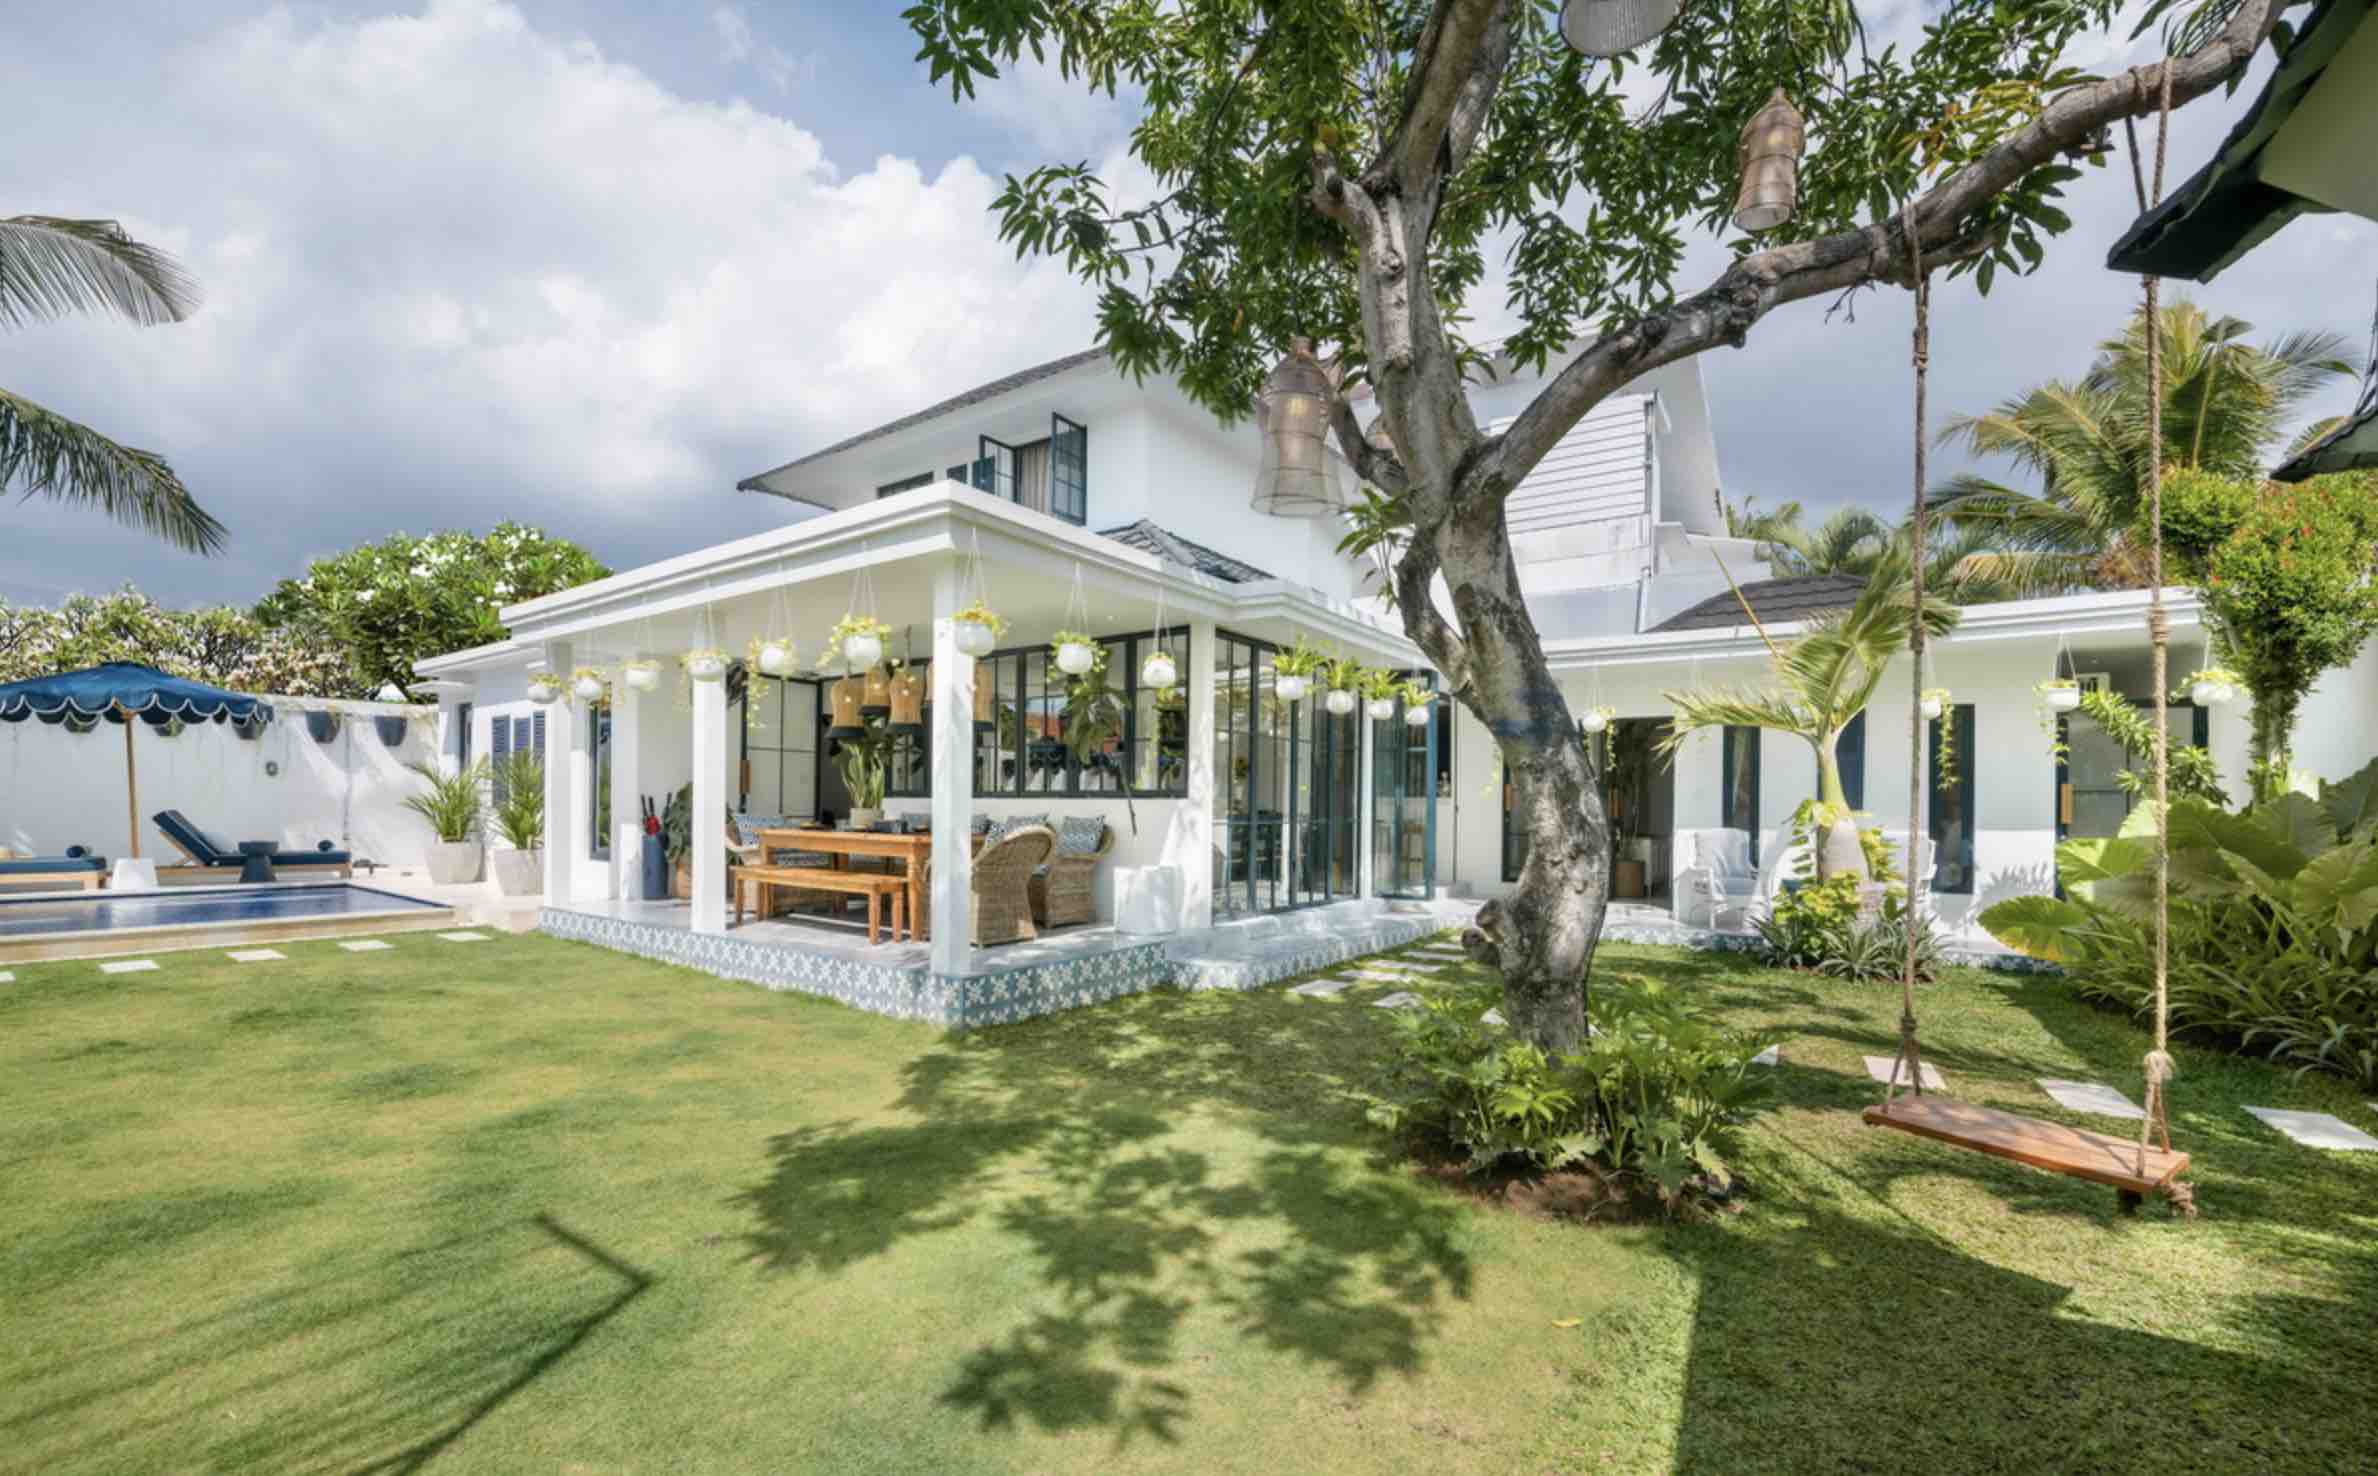 where to stay in Bali - villa pintu biru